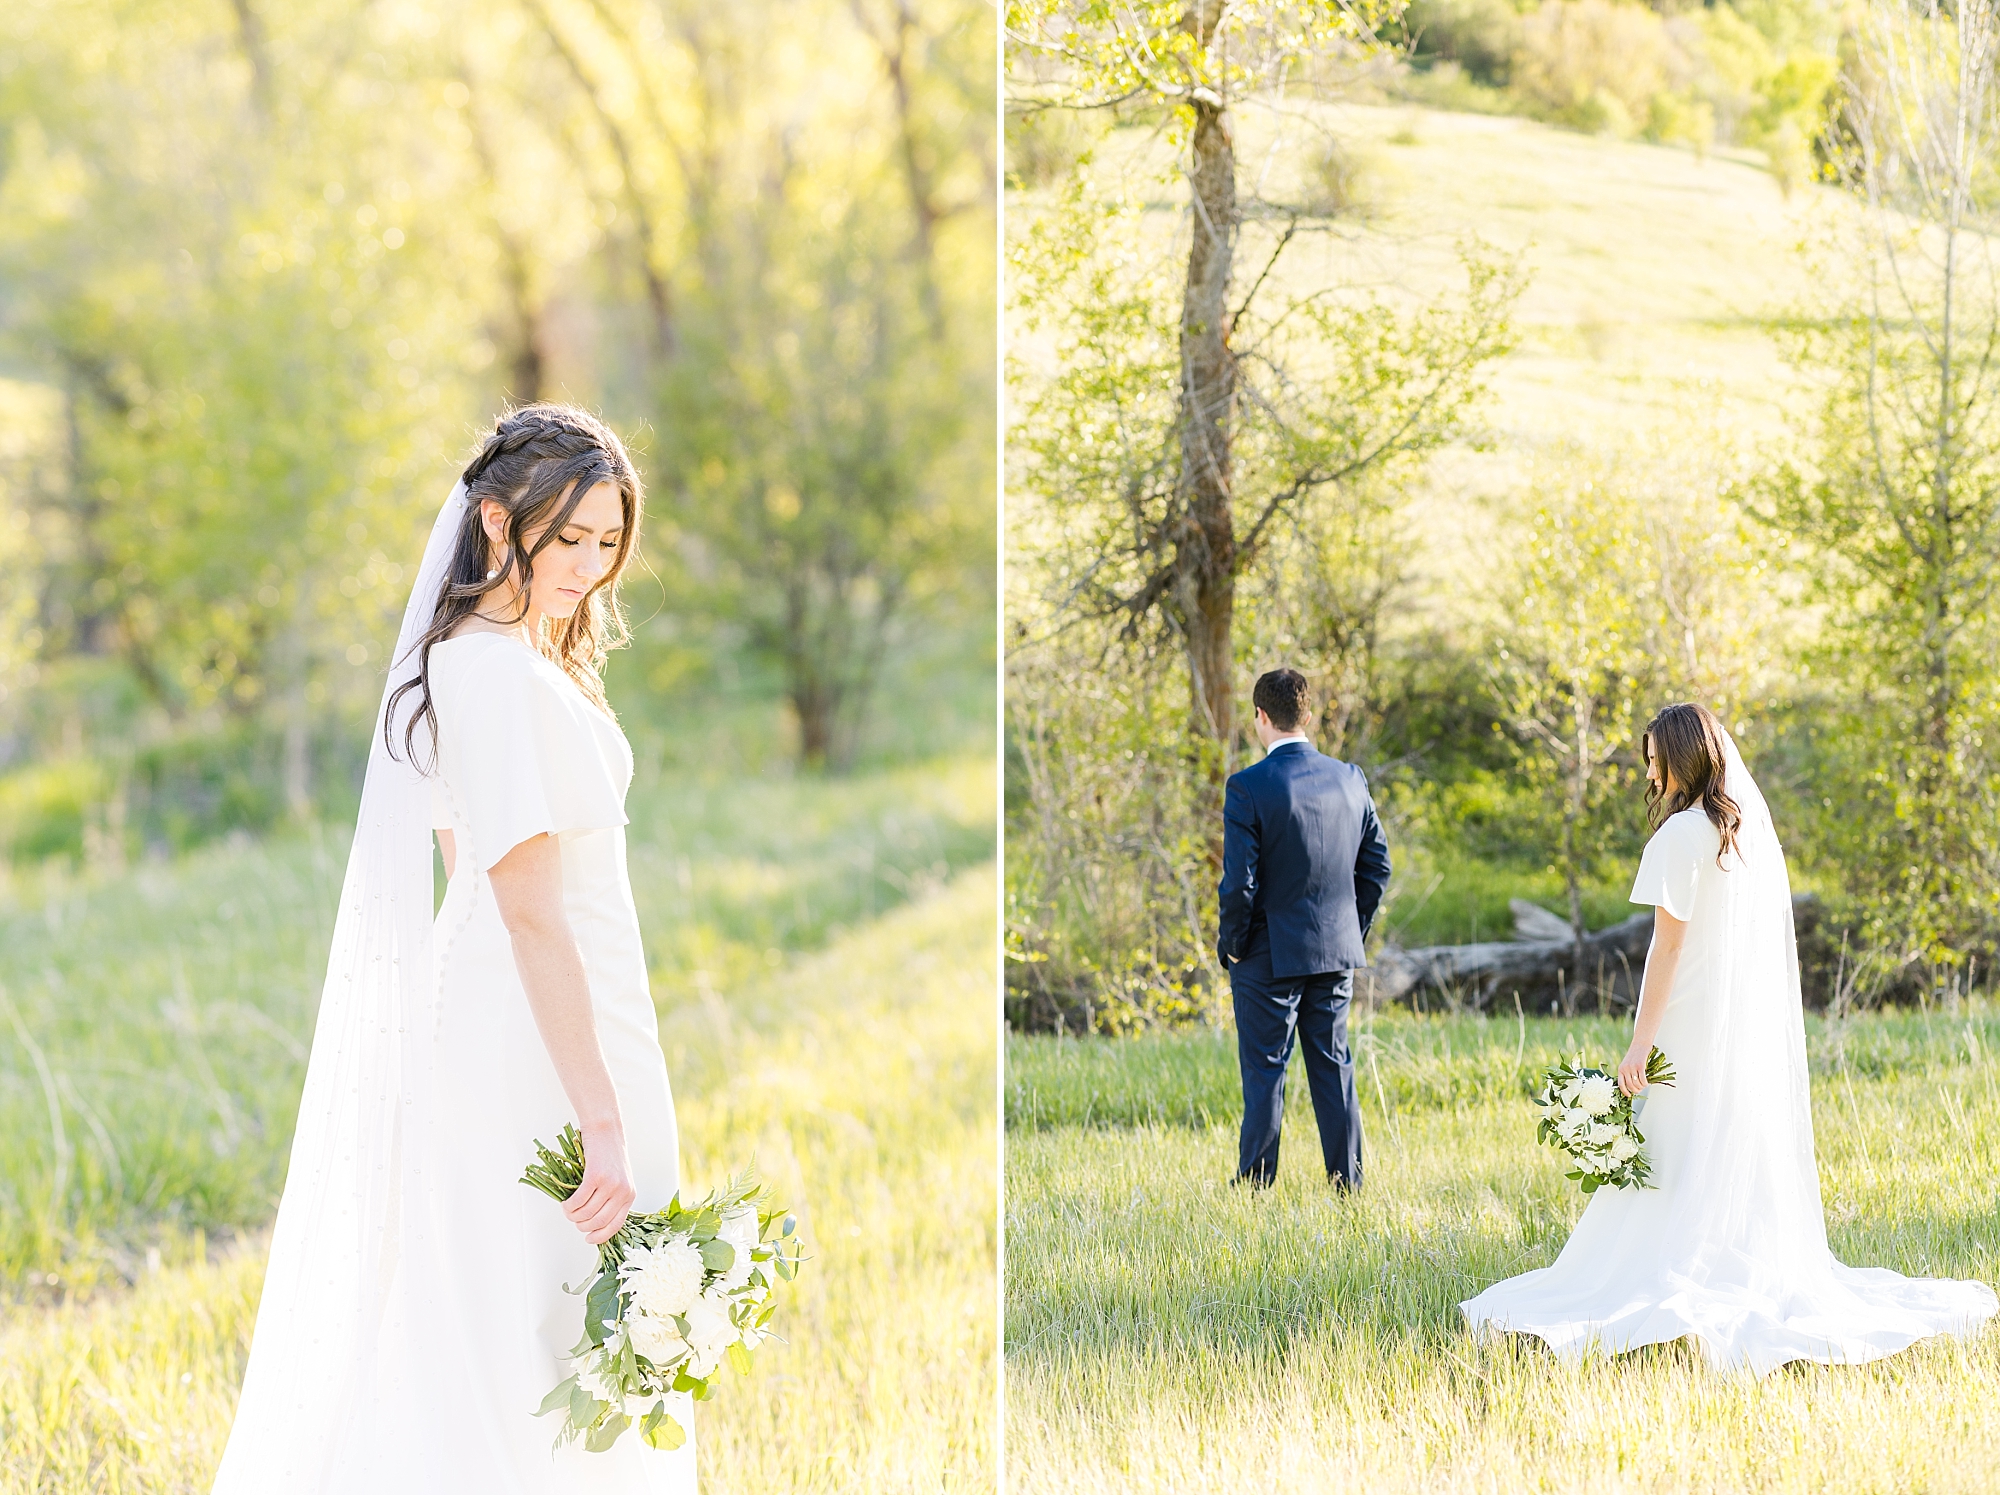 Summer bridals and formals in Utah